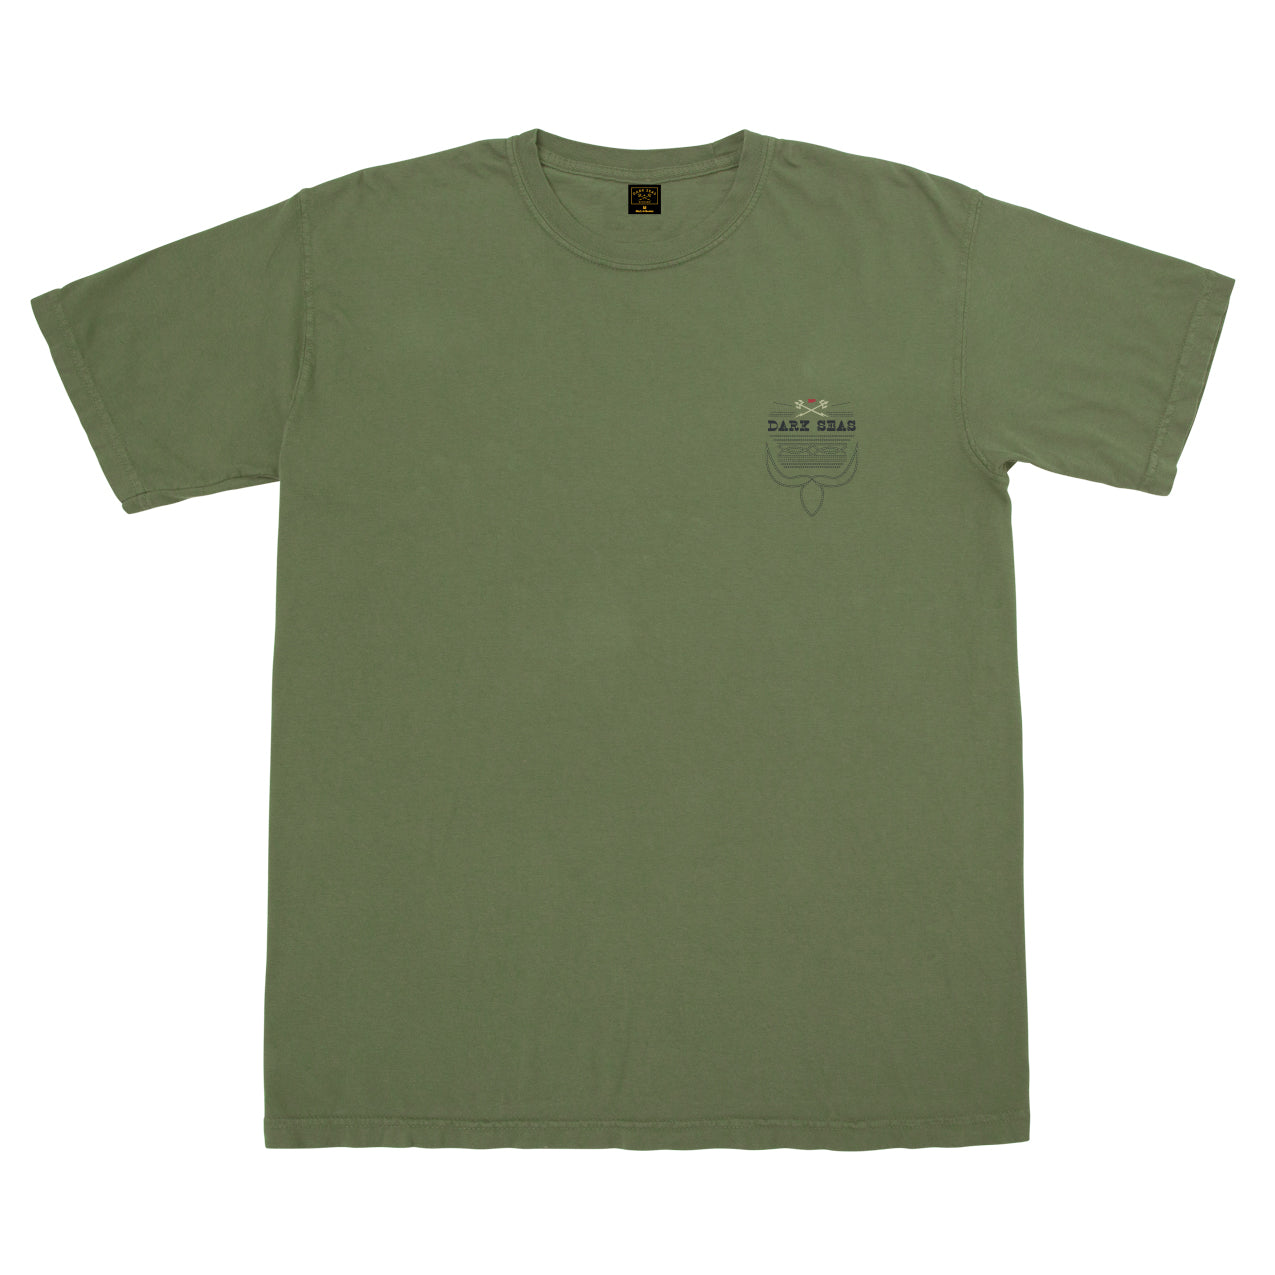 Dark Seas Tumbleweed Pigment Men's S/S T-Shirt